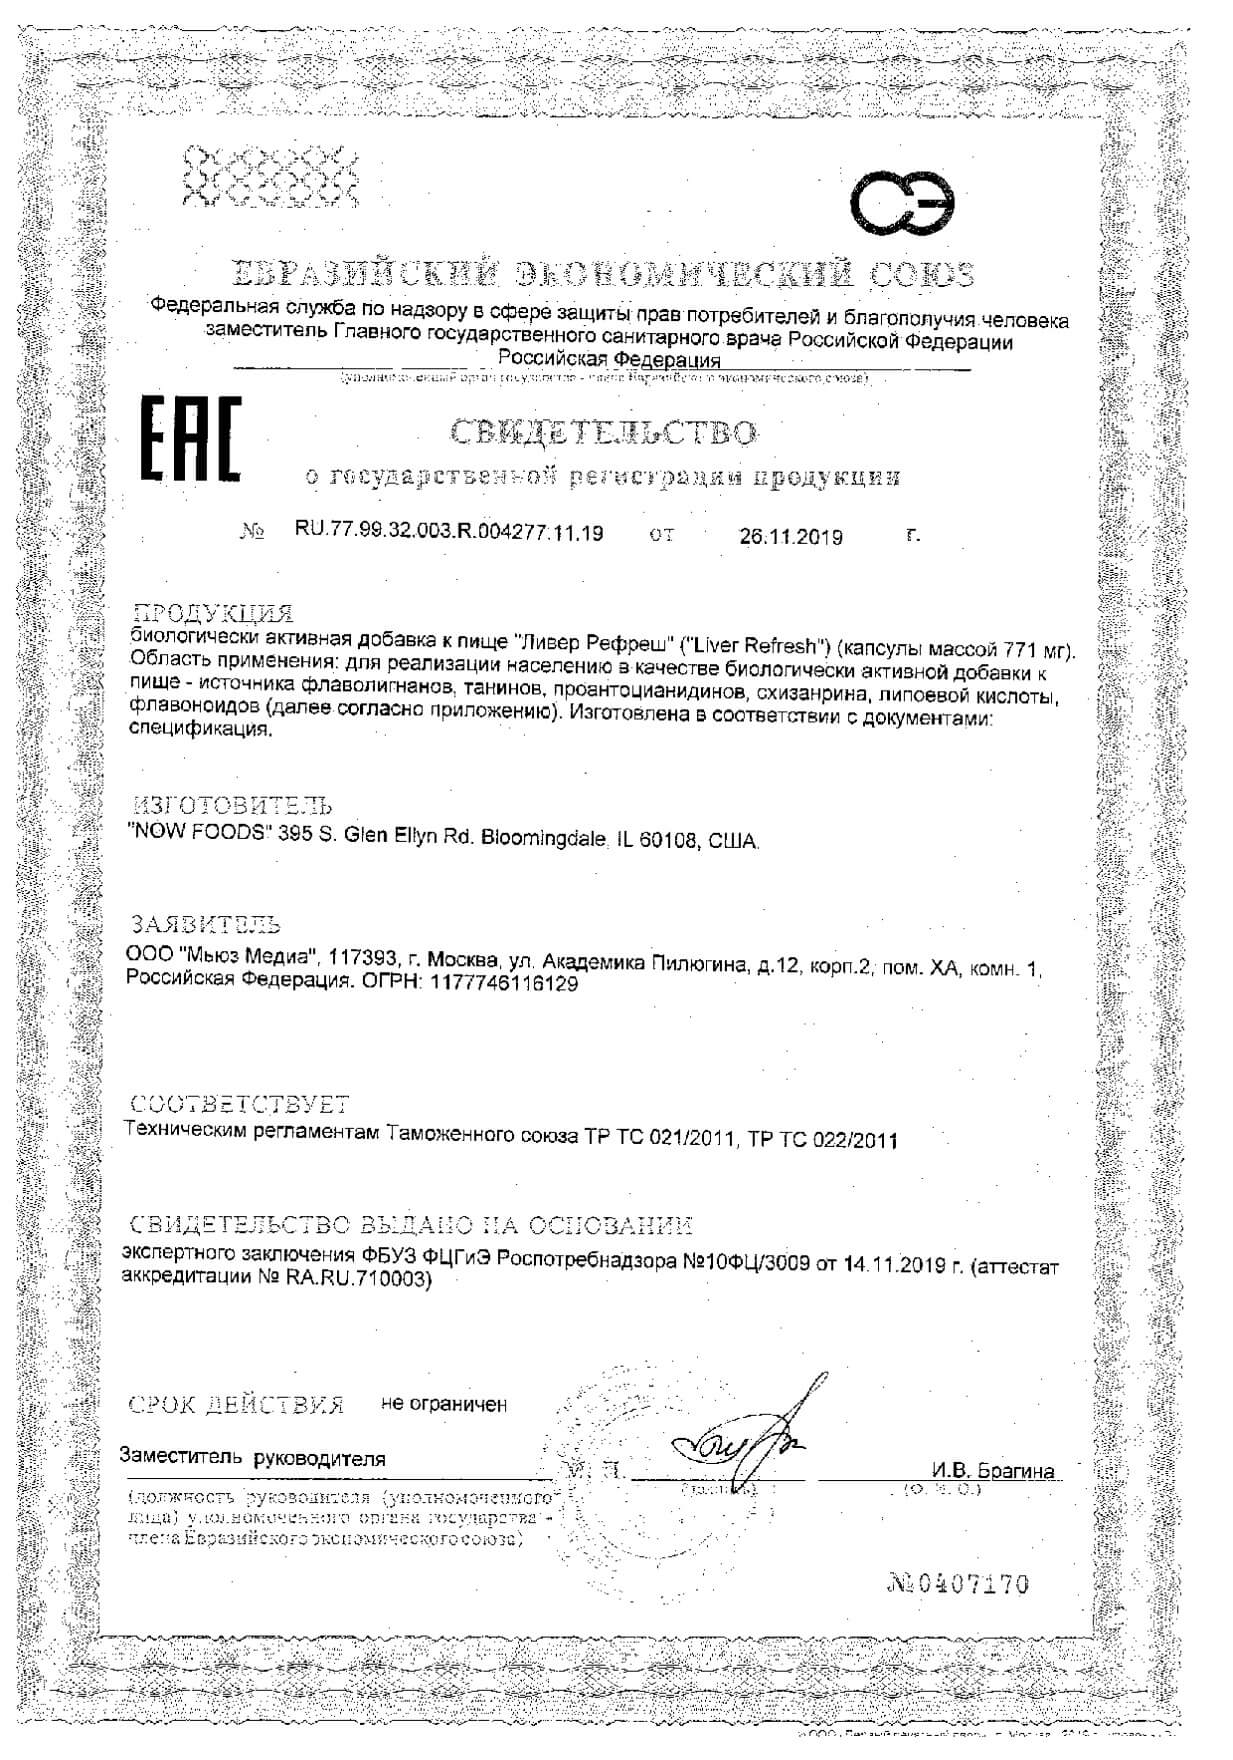 Ливер Рефреш Now/Нау капсулы 771мг 180шт: сертификат